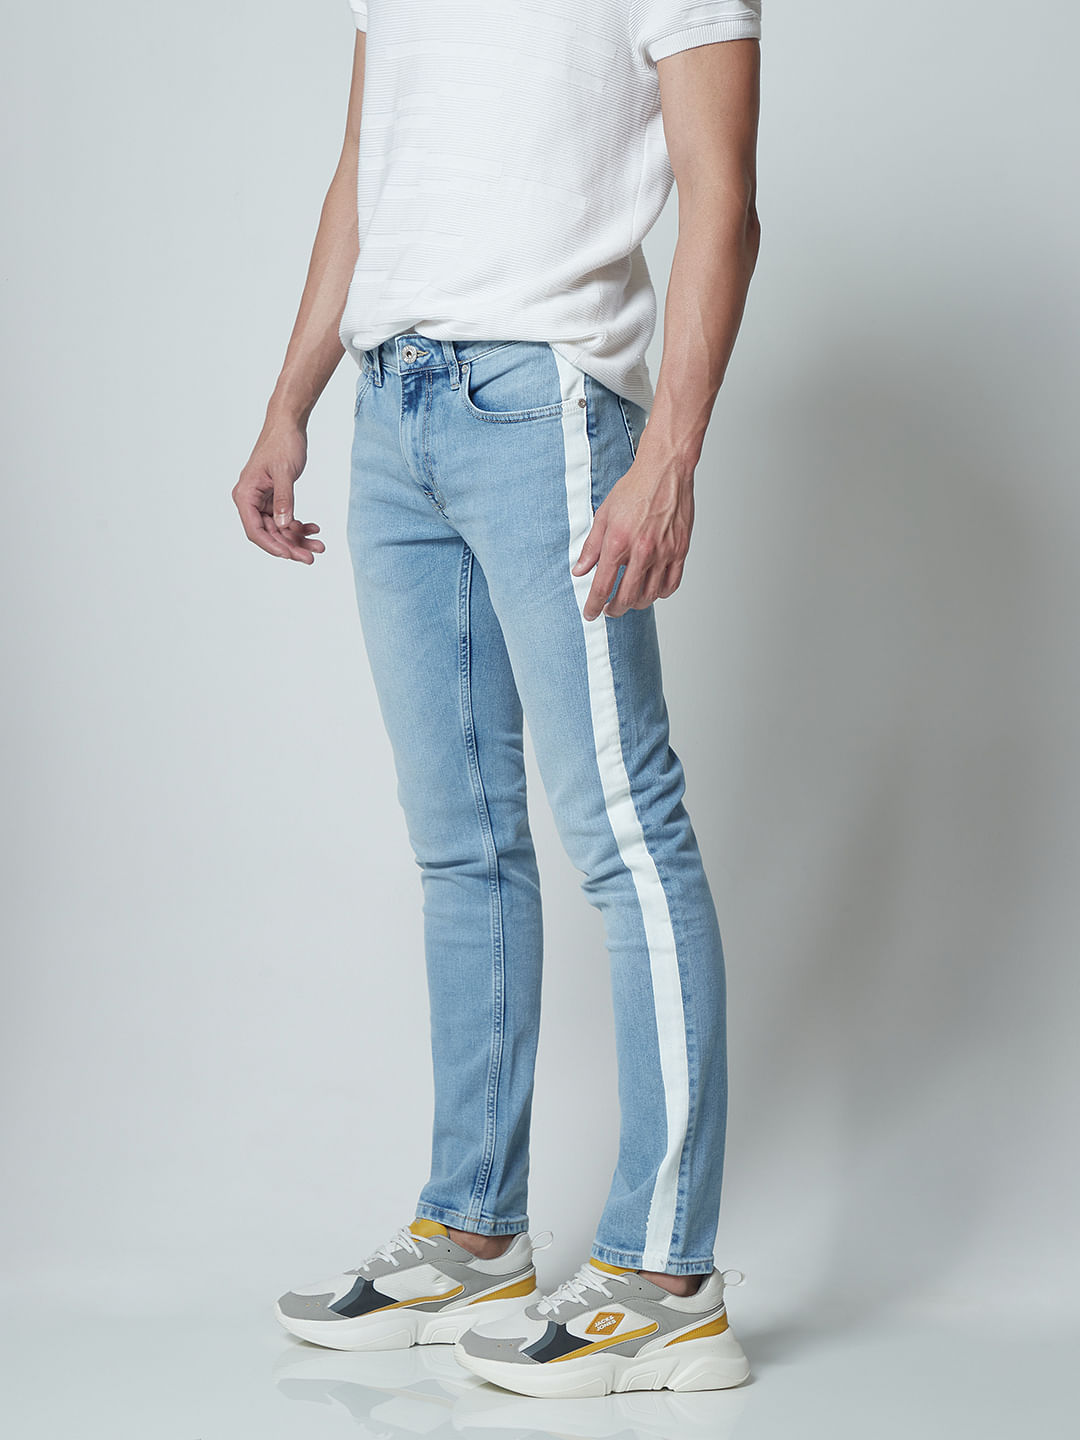 Men Should Only Wear Skinny Jeans - THE JEANS BLOG